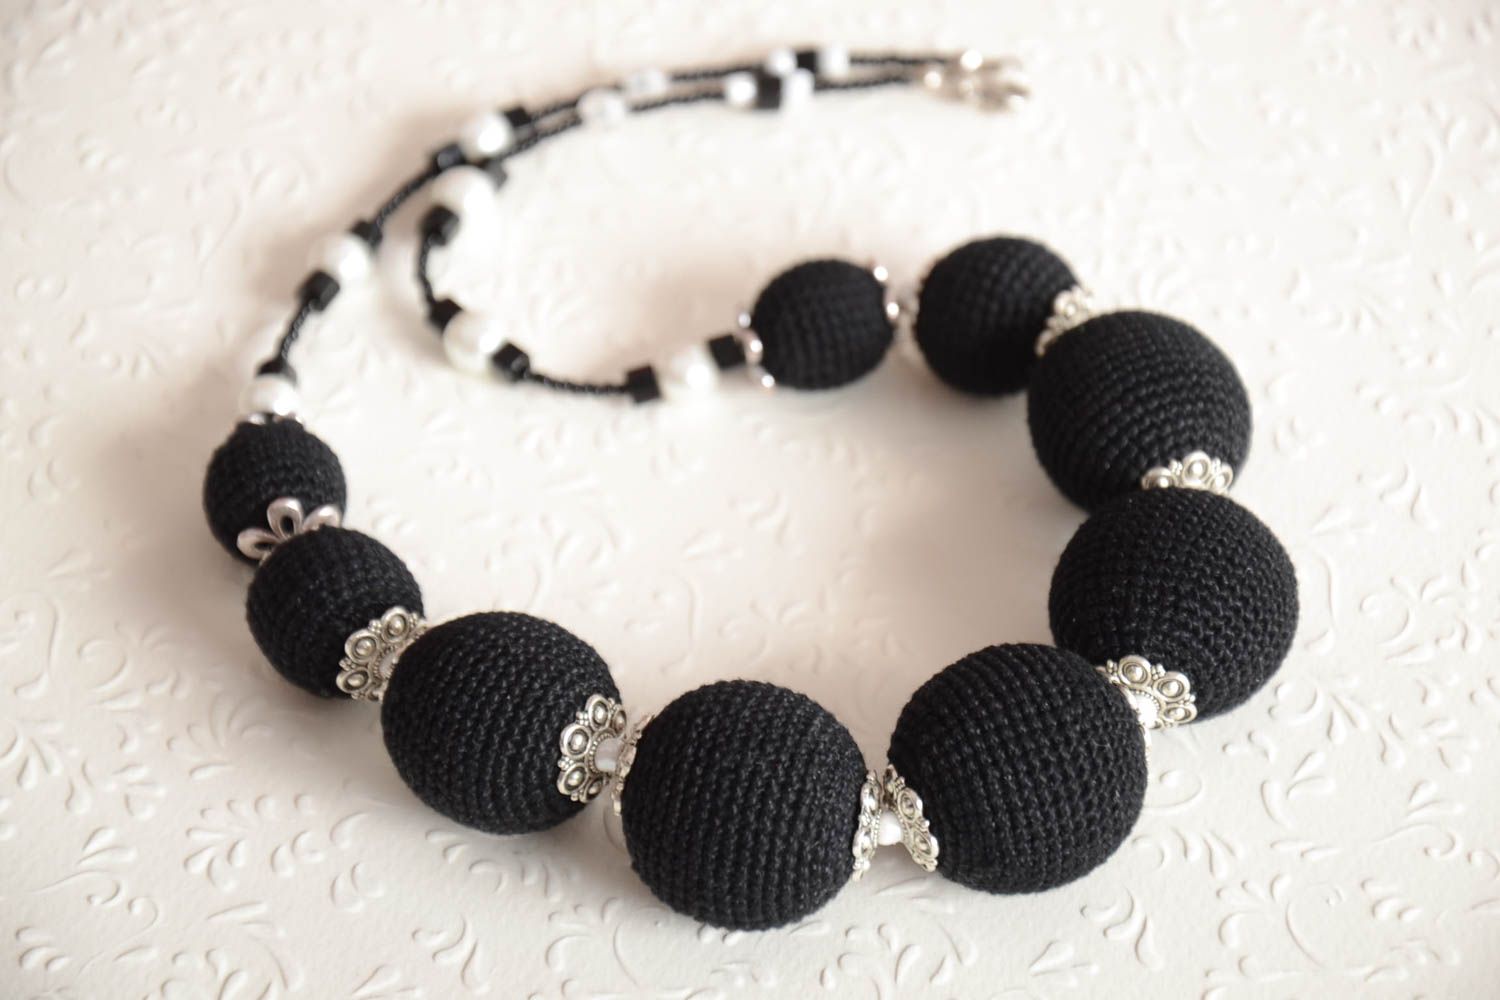 Handmade unusual beaded necklace black and white accessory stylish jewelry photo 1